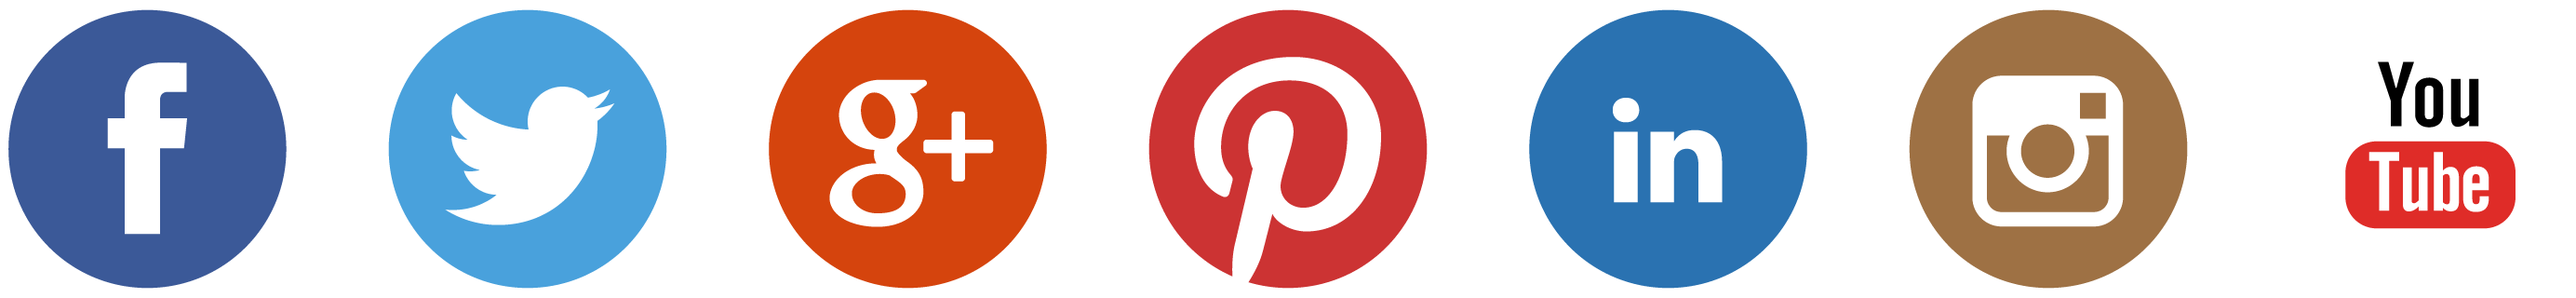 Twitter facebook png. Logo instagram social media